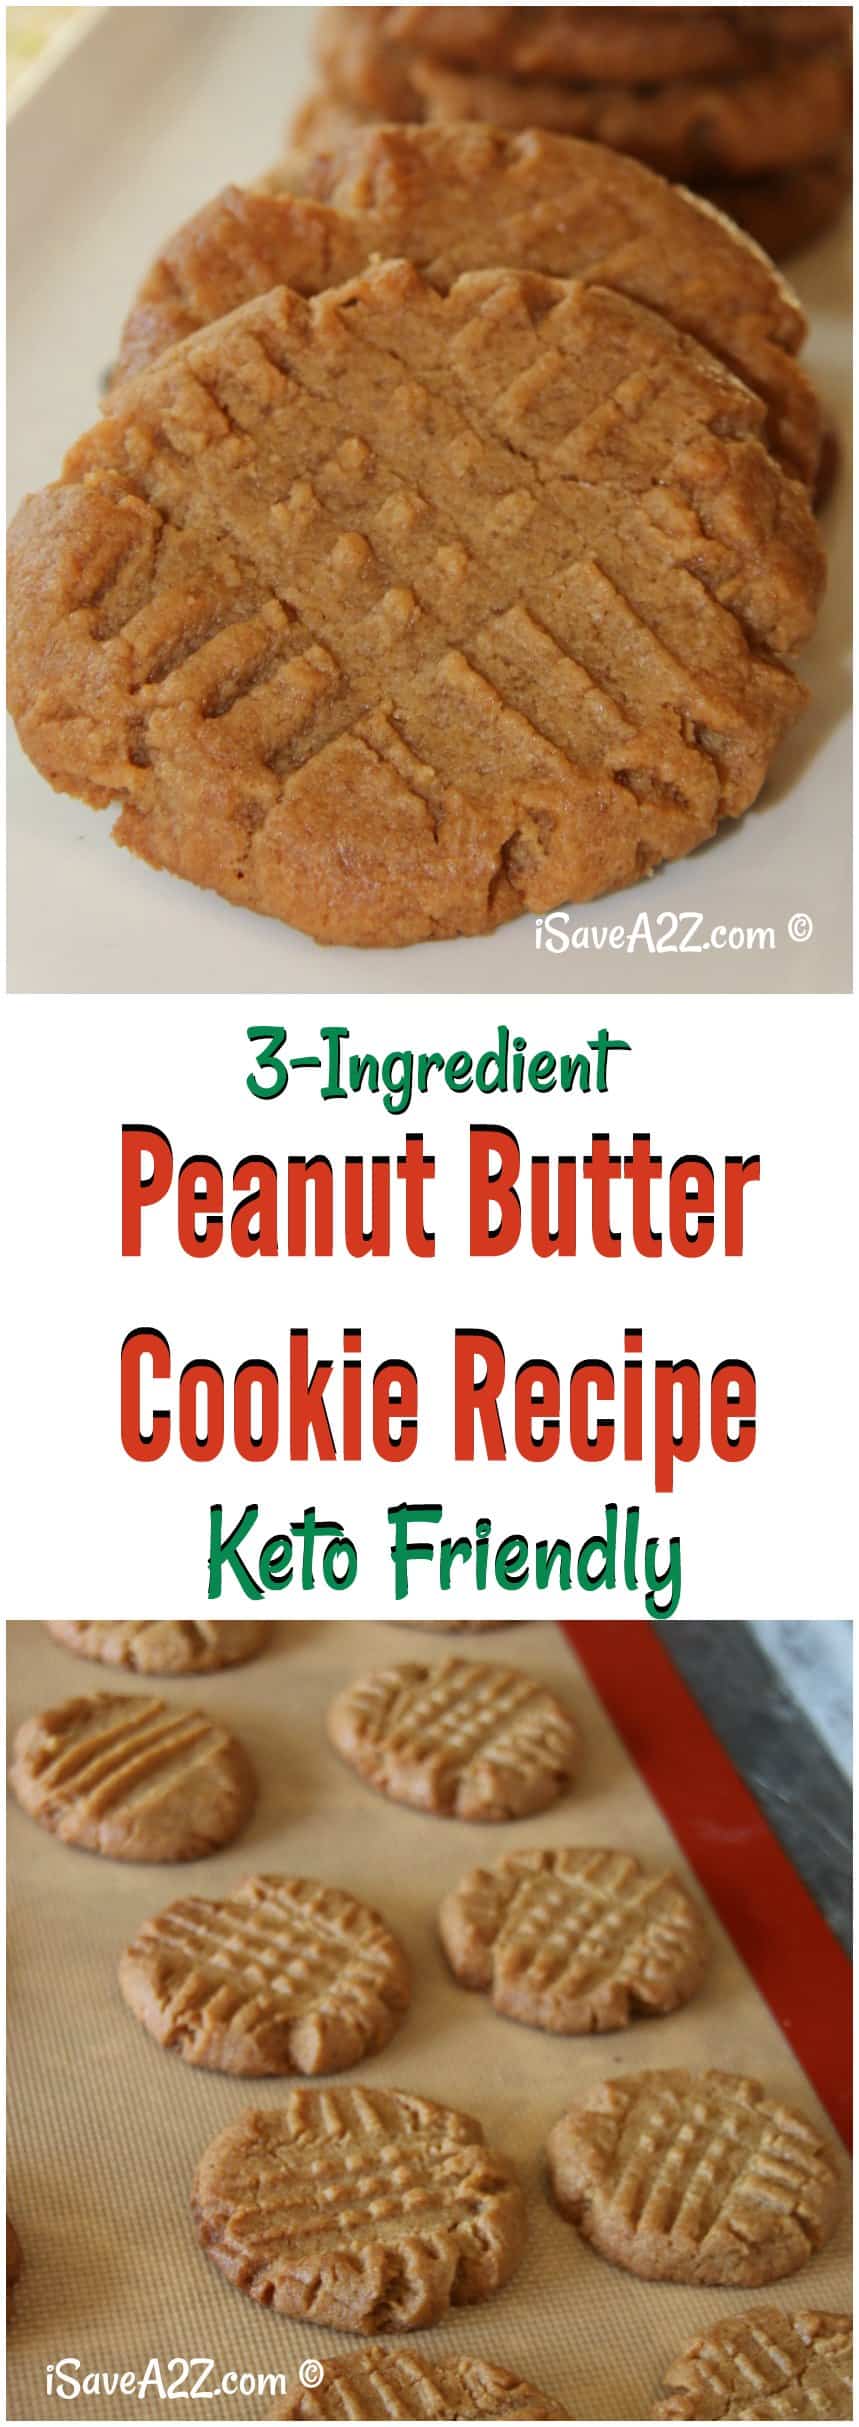 3 Ingredient Keto Peanut Butter Cookies Recipe - iSaveA2Z.com